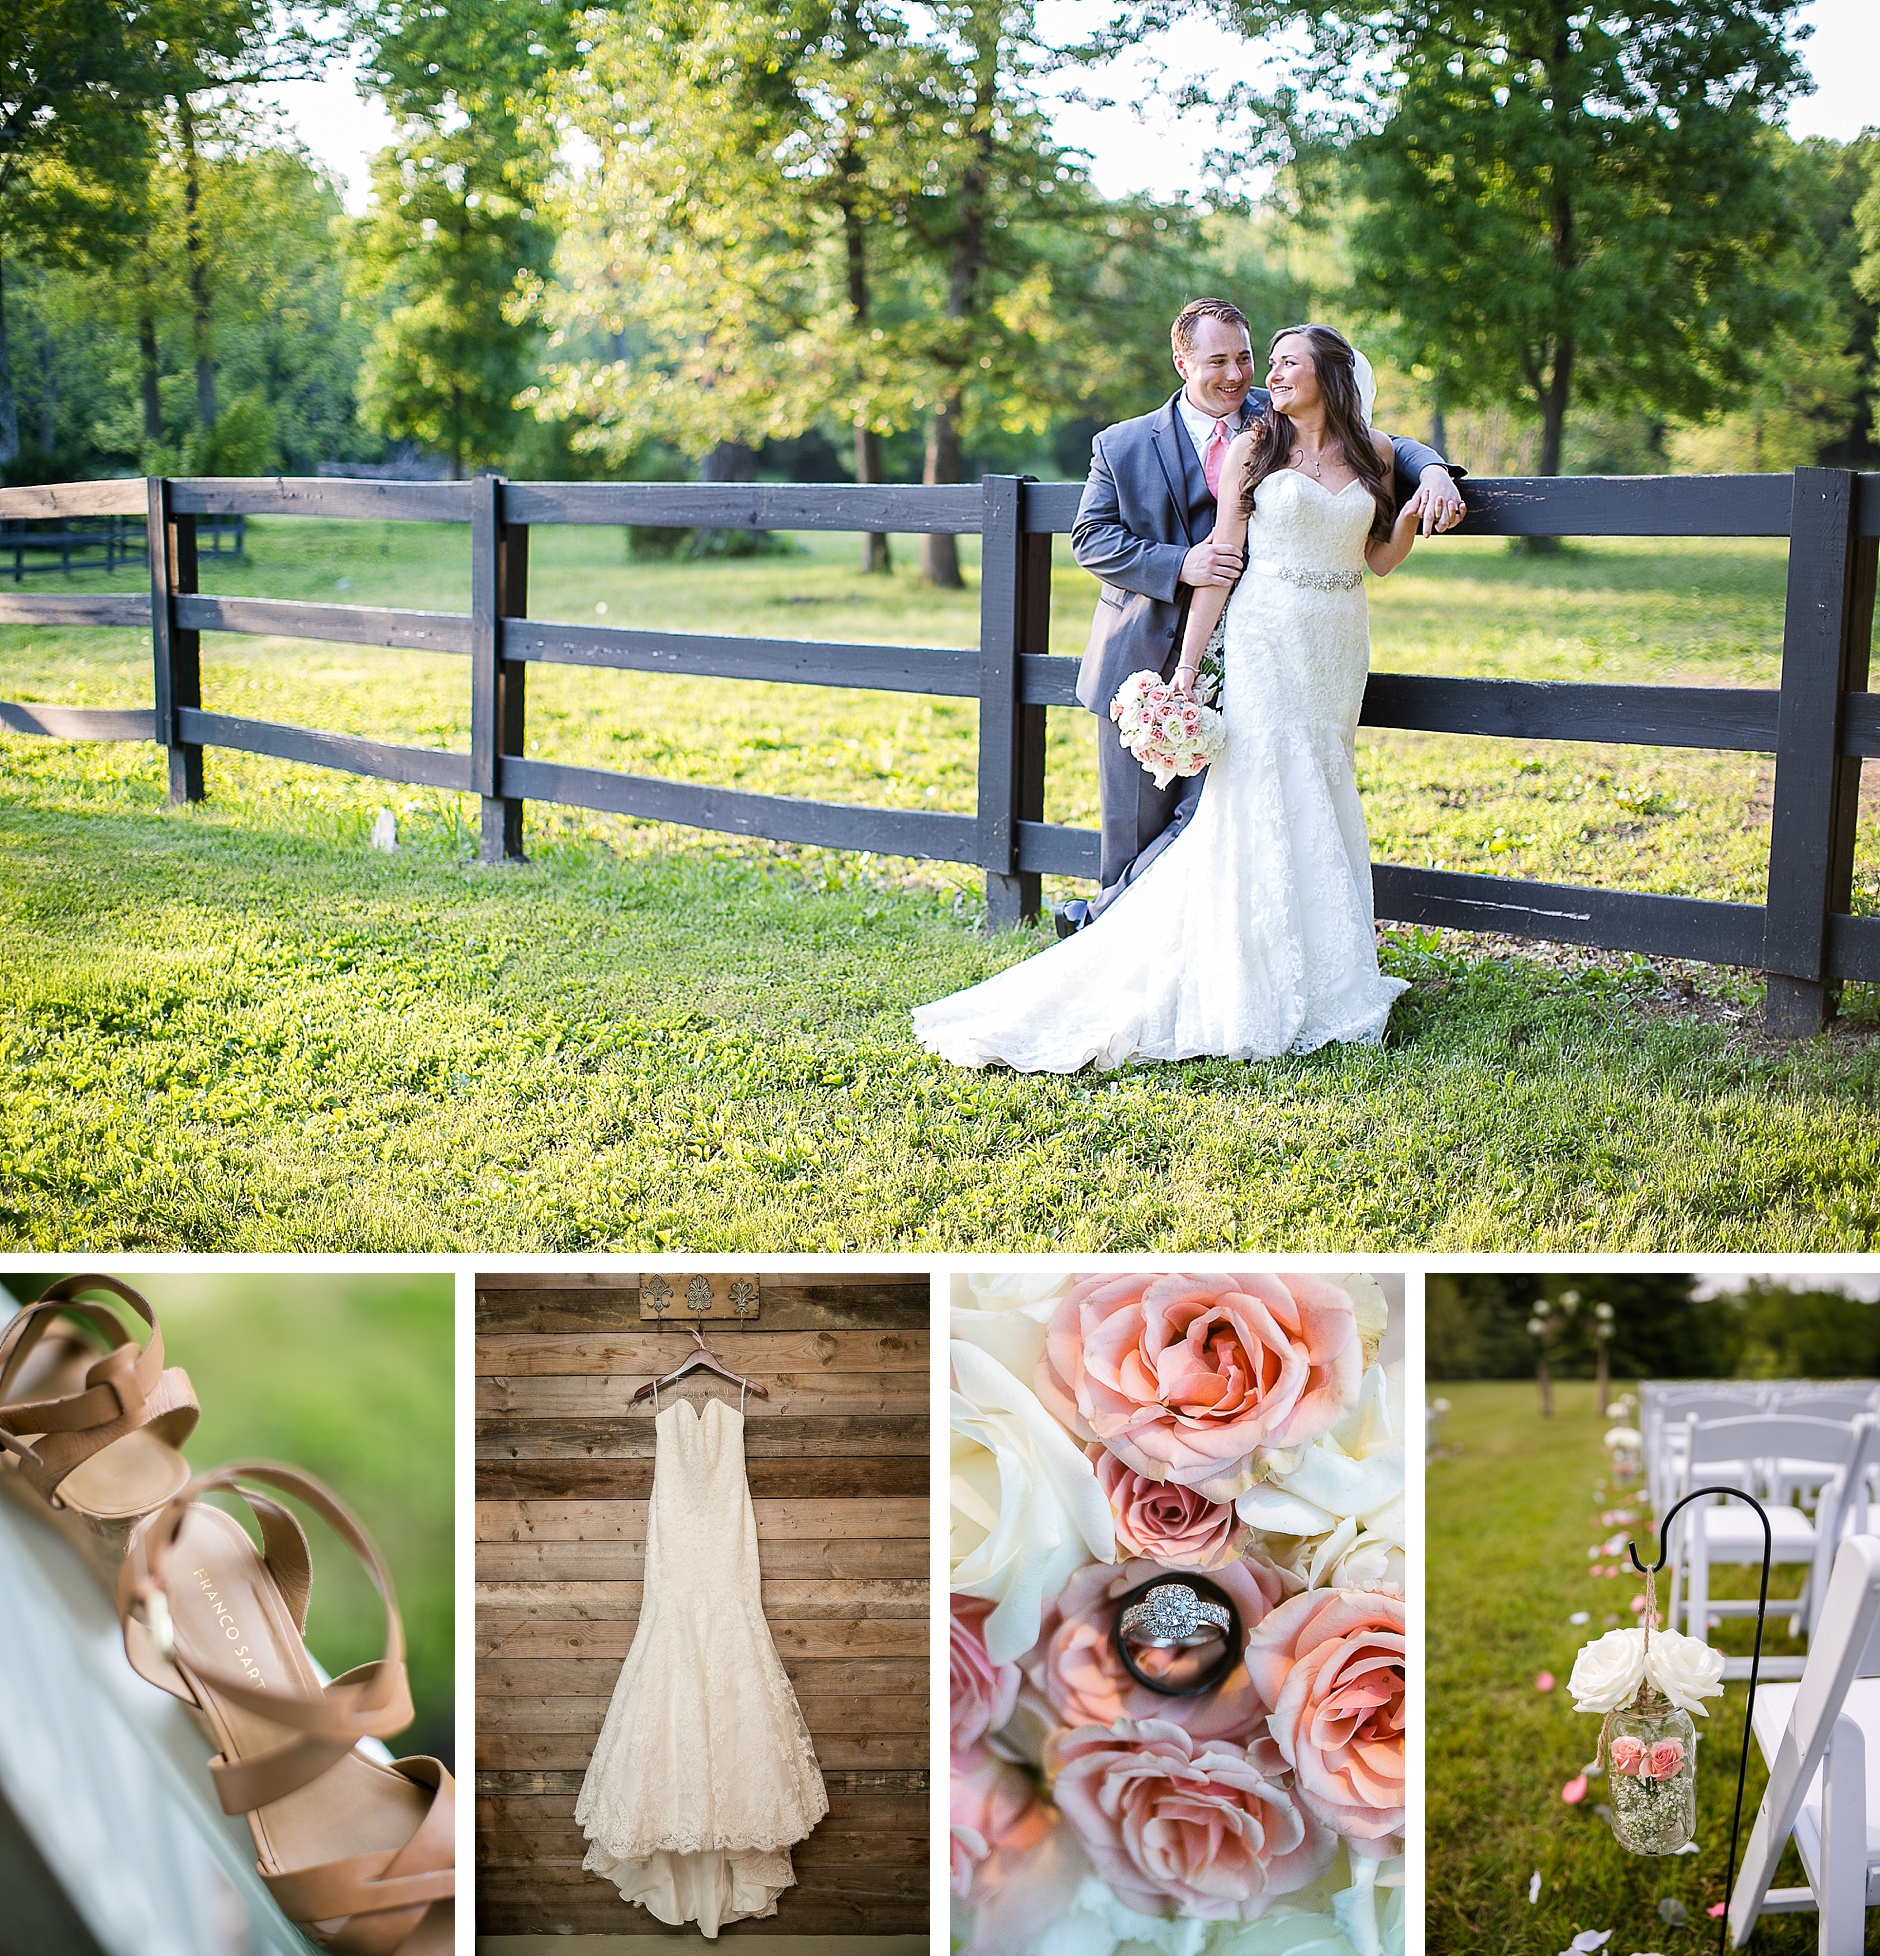 Best-of-Weddings-2015-Rachael-Houser-Photography_0014